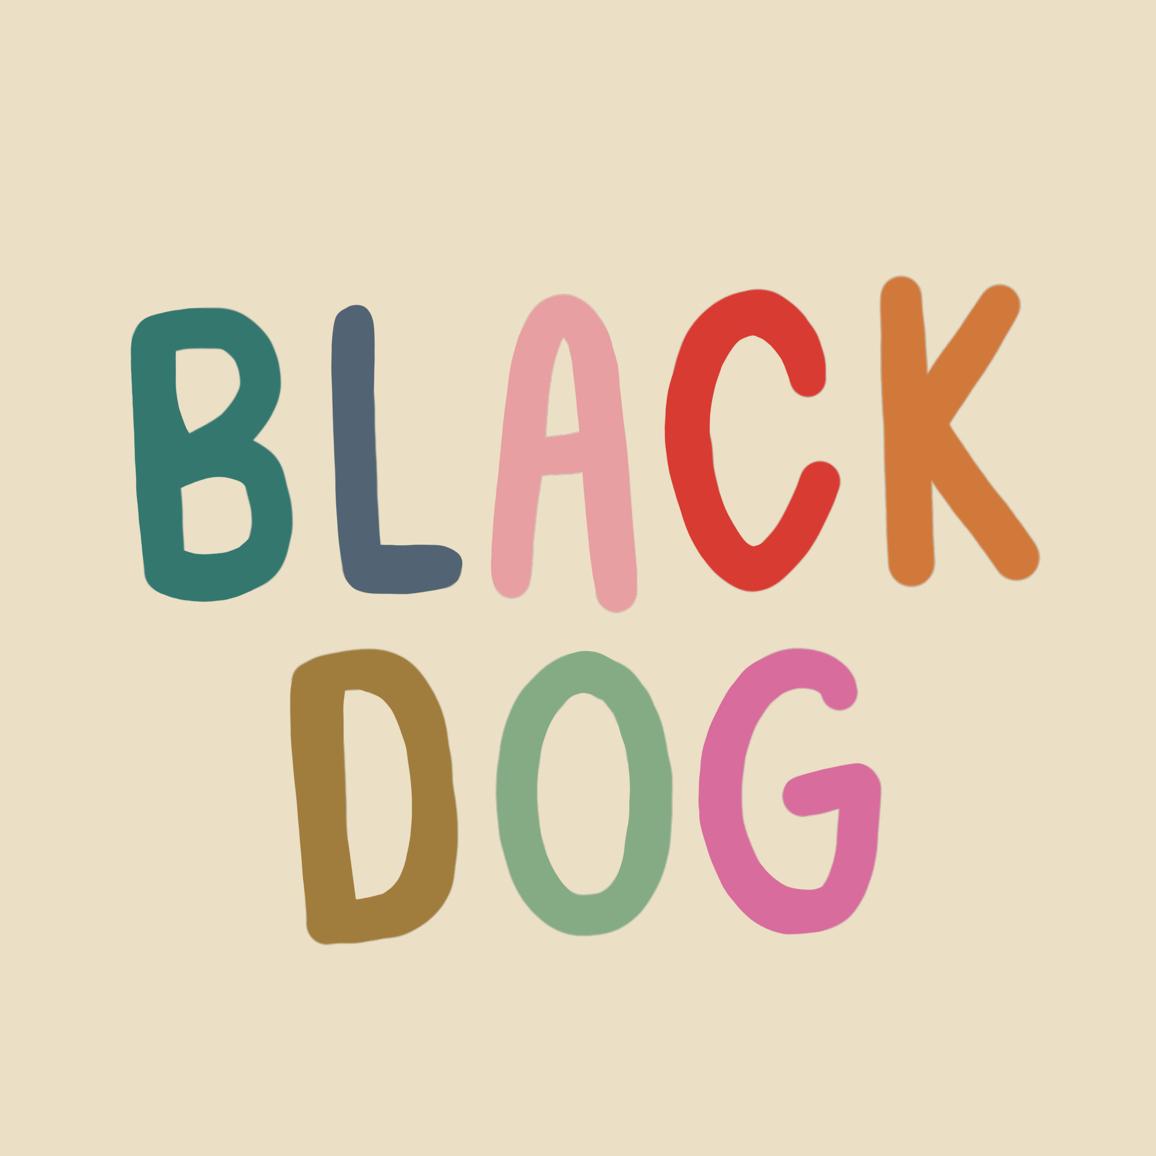 blackdogbikinis's images